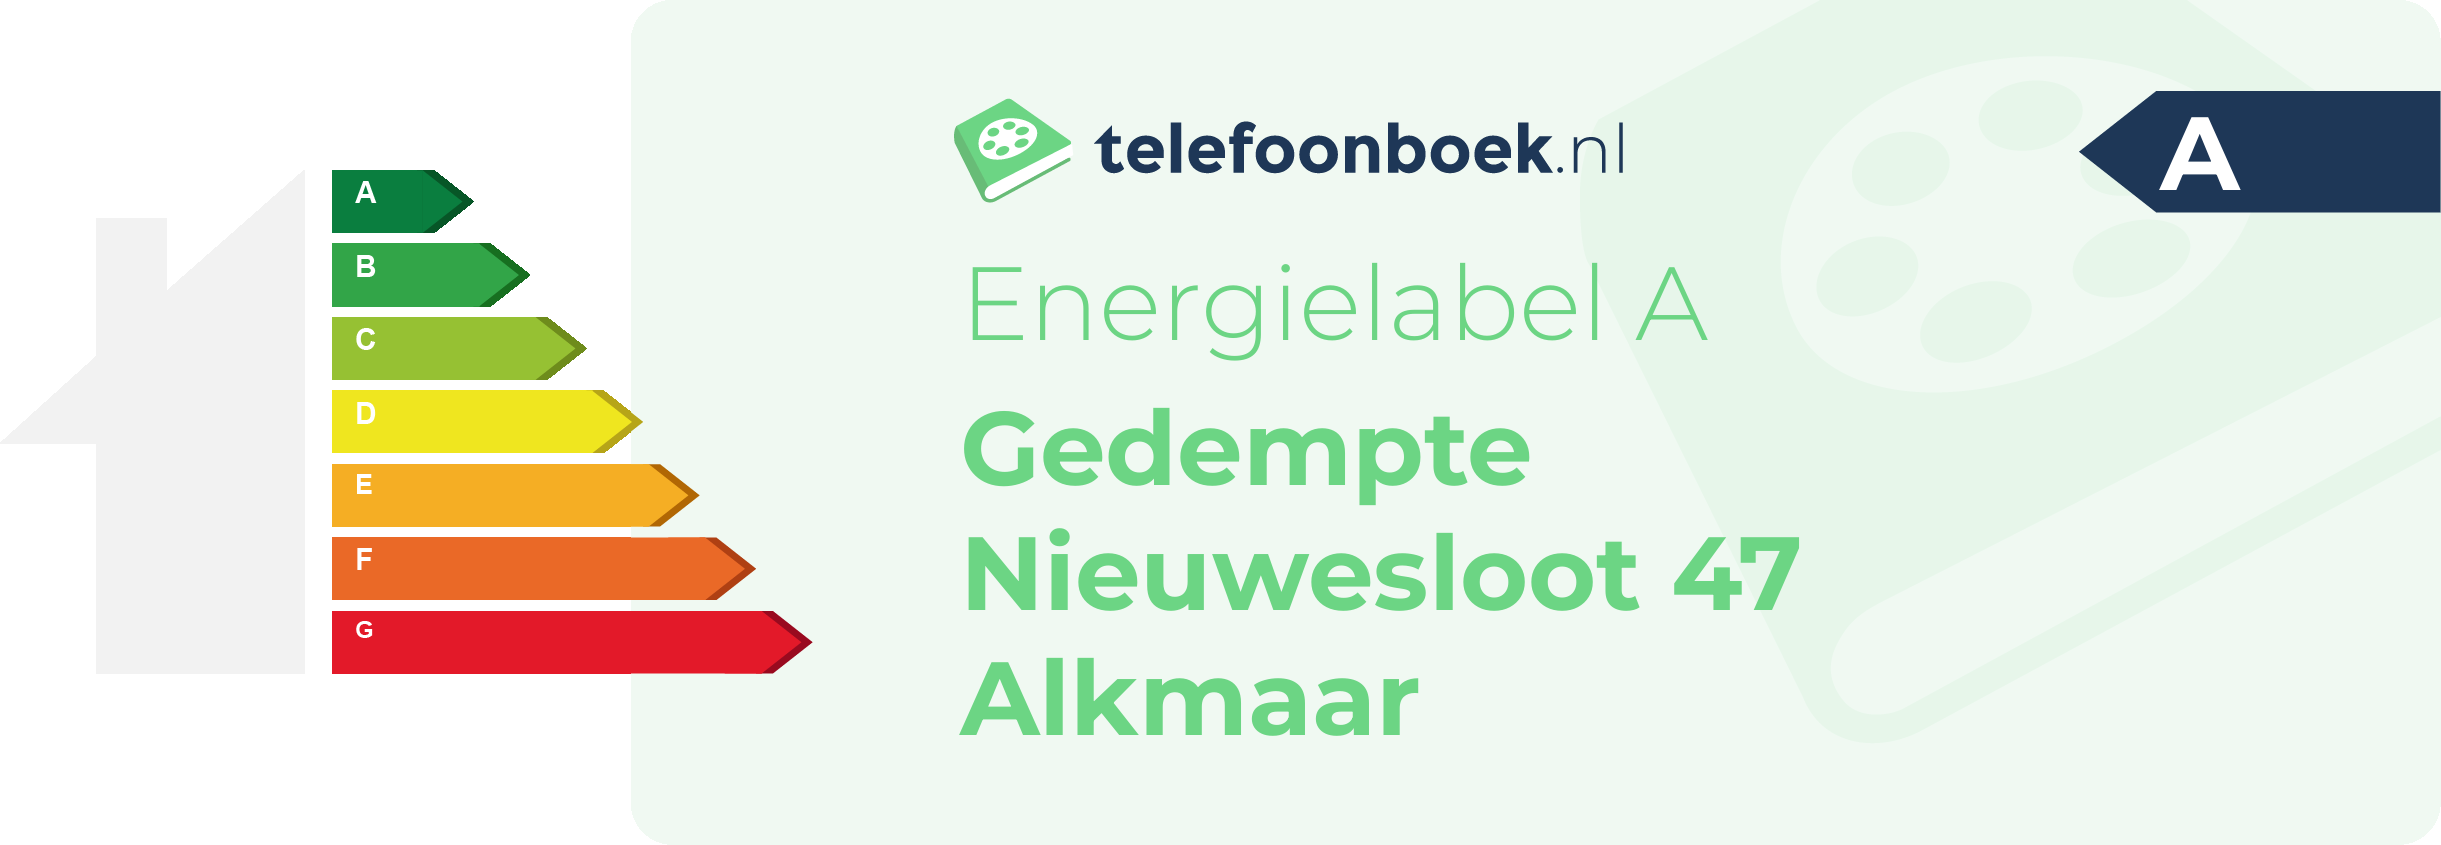 Energielabel Gedempte Nieuwesloot 47 Alkmaar